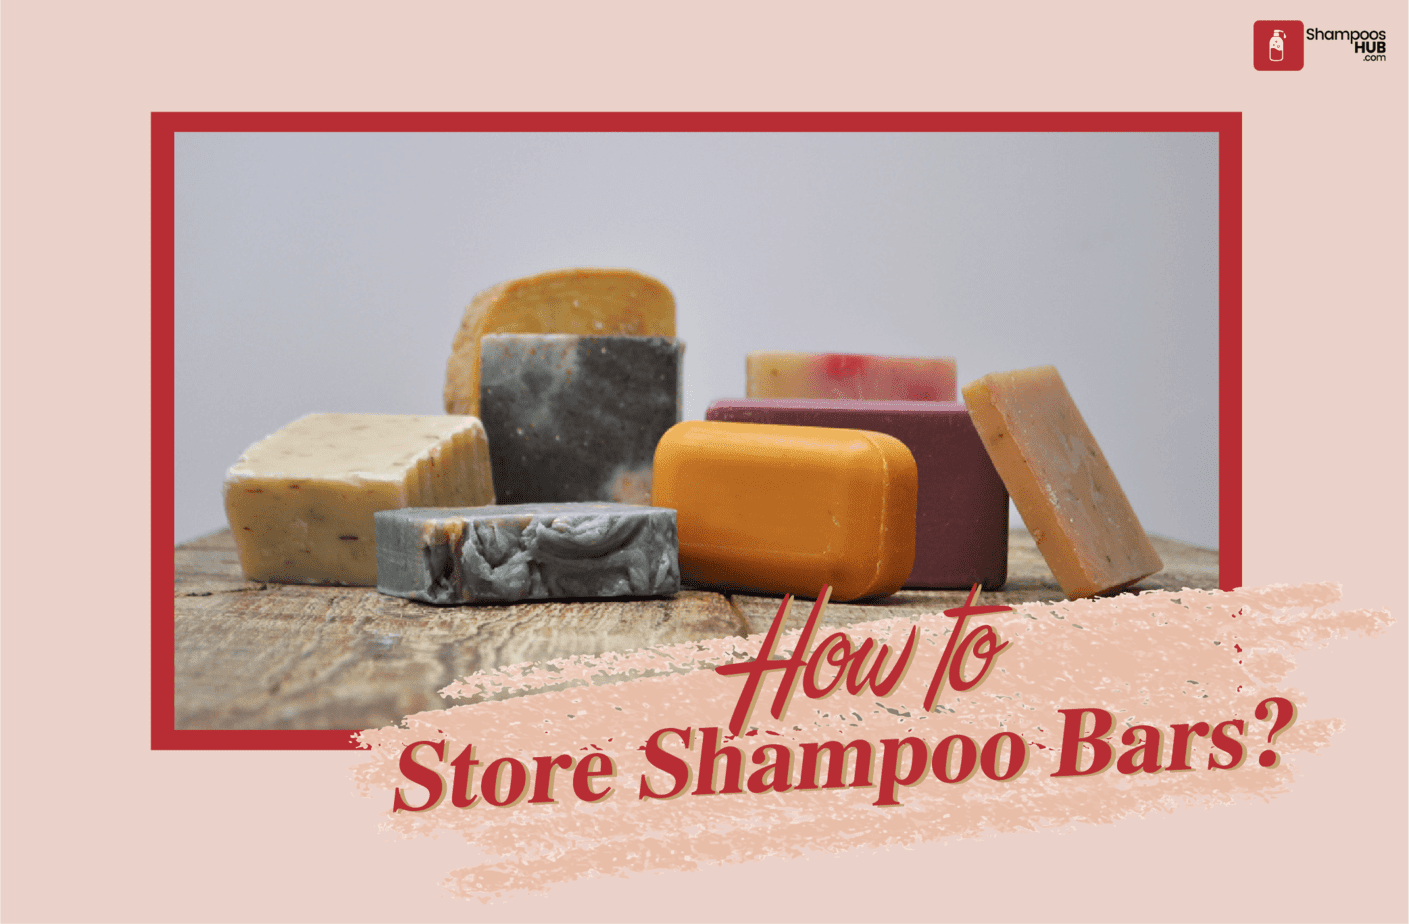 How to Store Shampoo Bars?